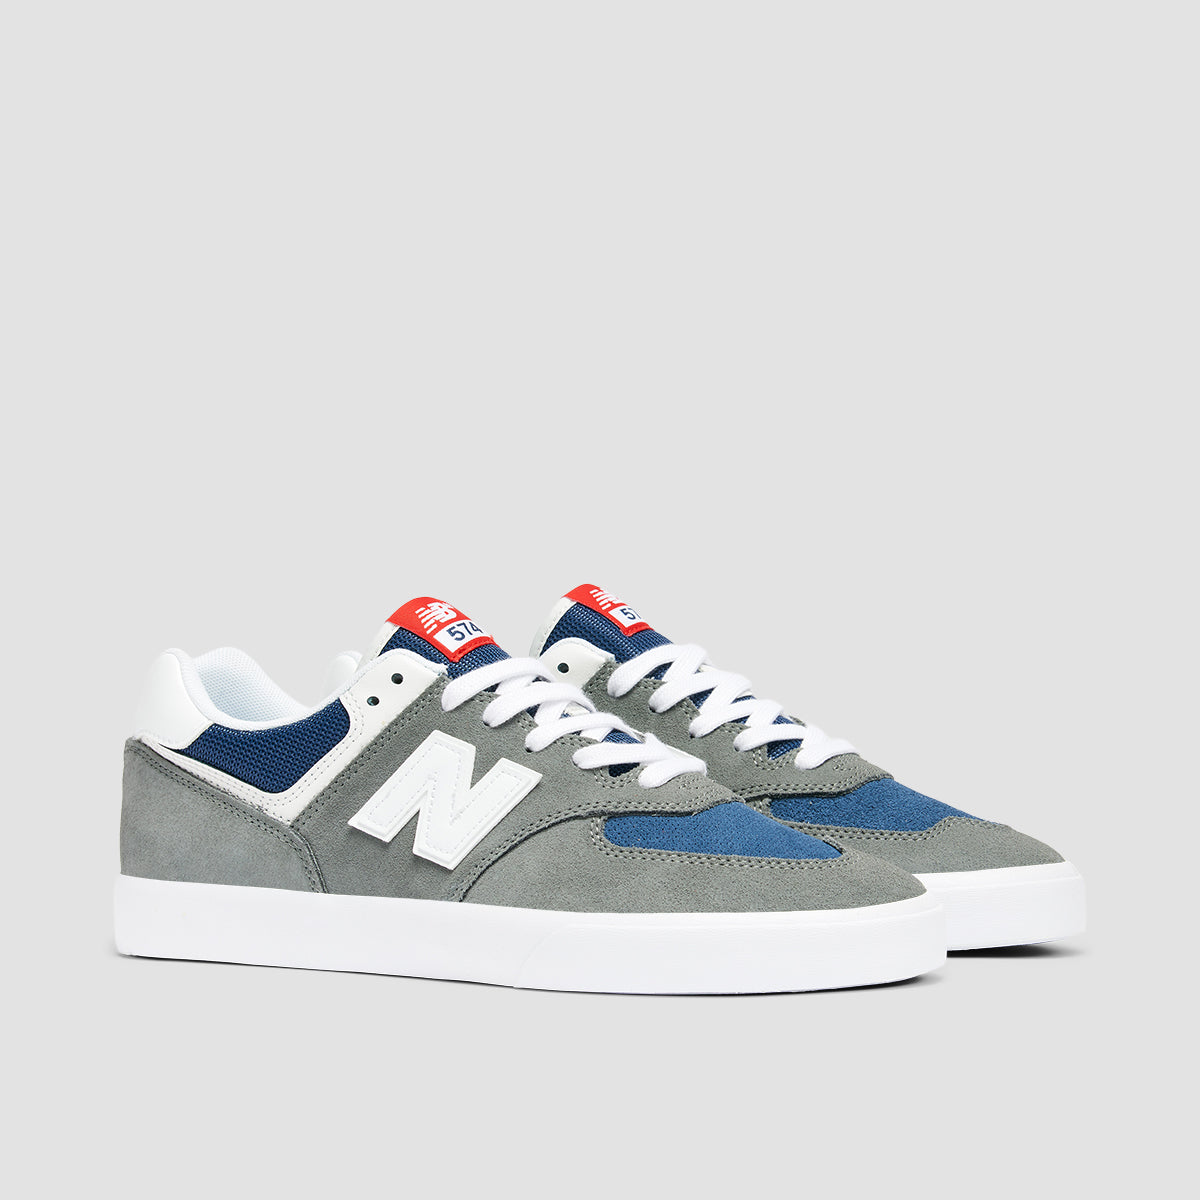 New Balance Numeric 574 Vulc Shoes - Grey/White